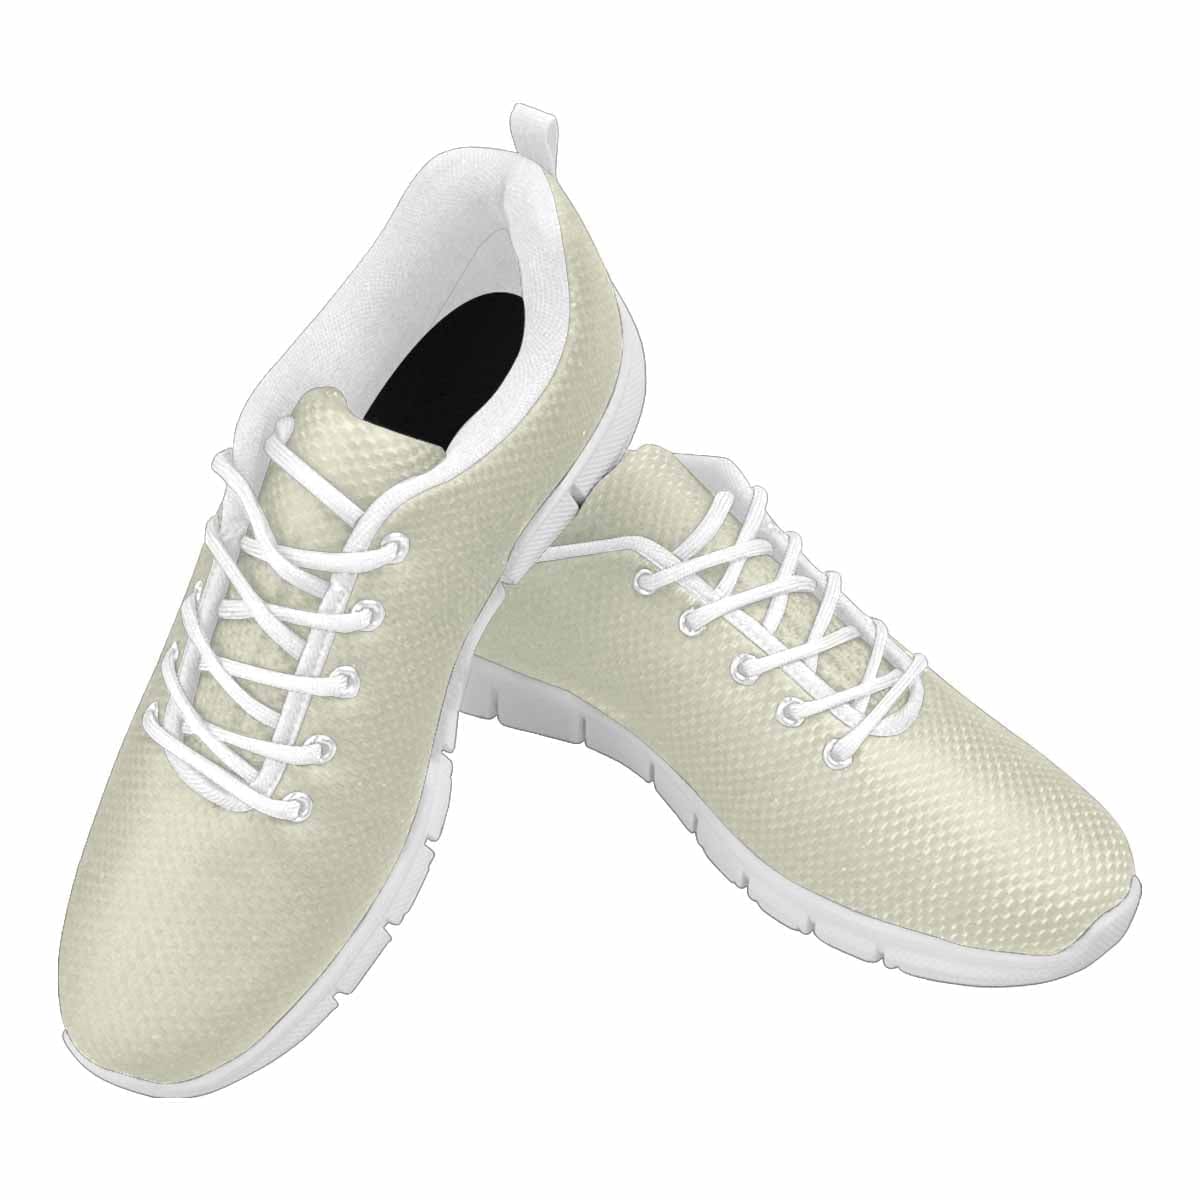 Sneakers For Men Beige - Running Shoes - Mens | Sneakers | Running